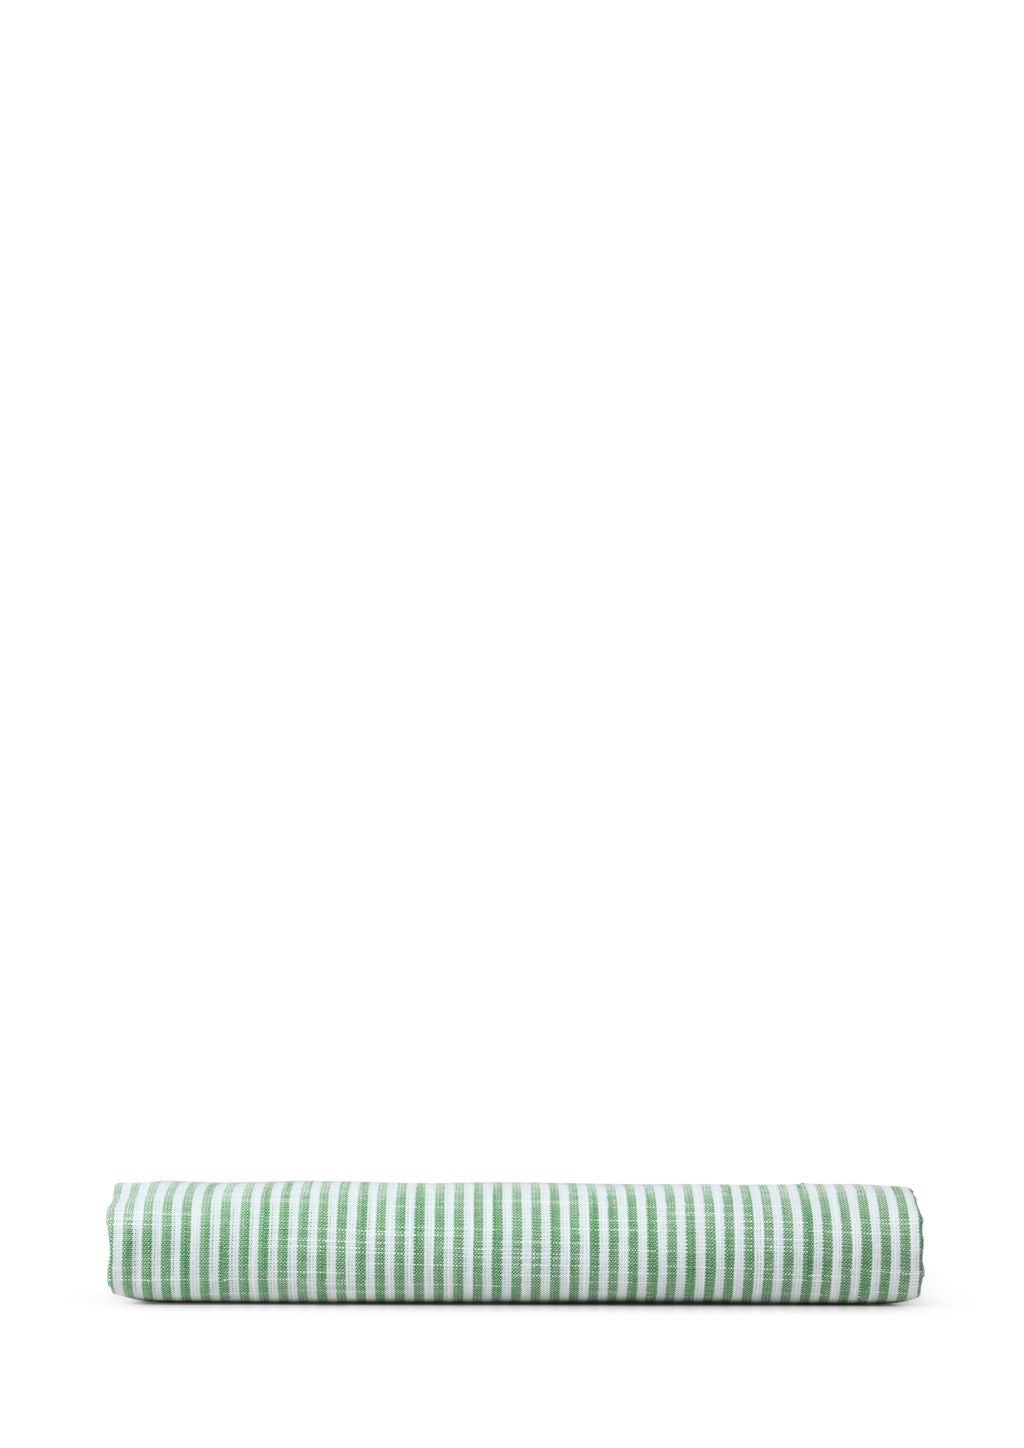 Juna monokrome linjer pute deksel 63 x60 cm, grønn/hvit